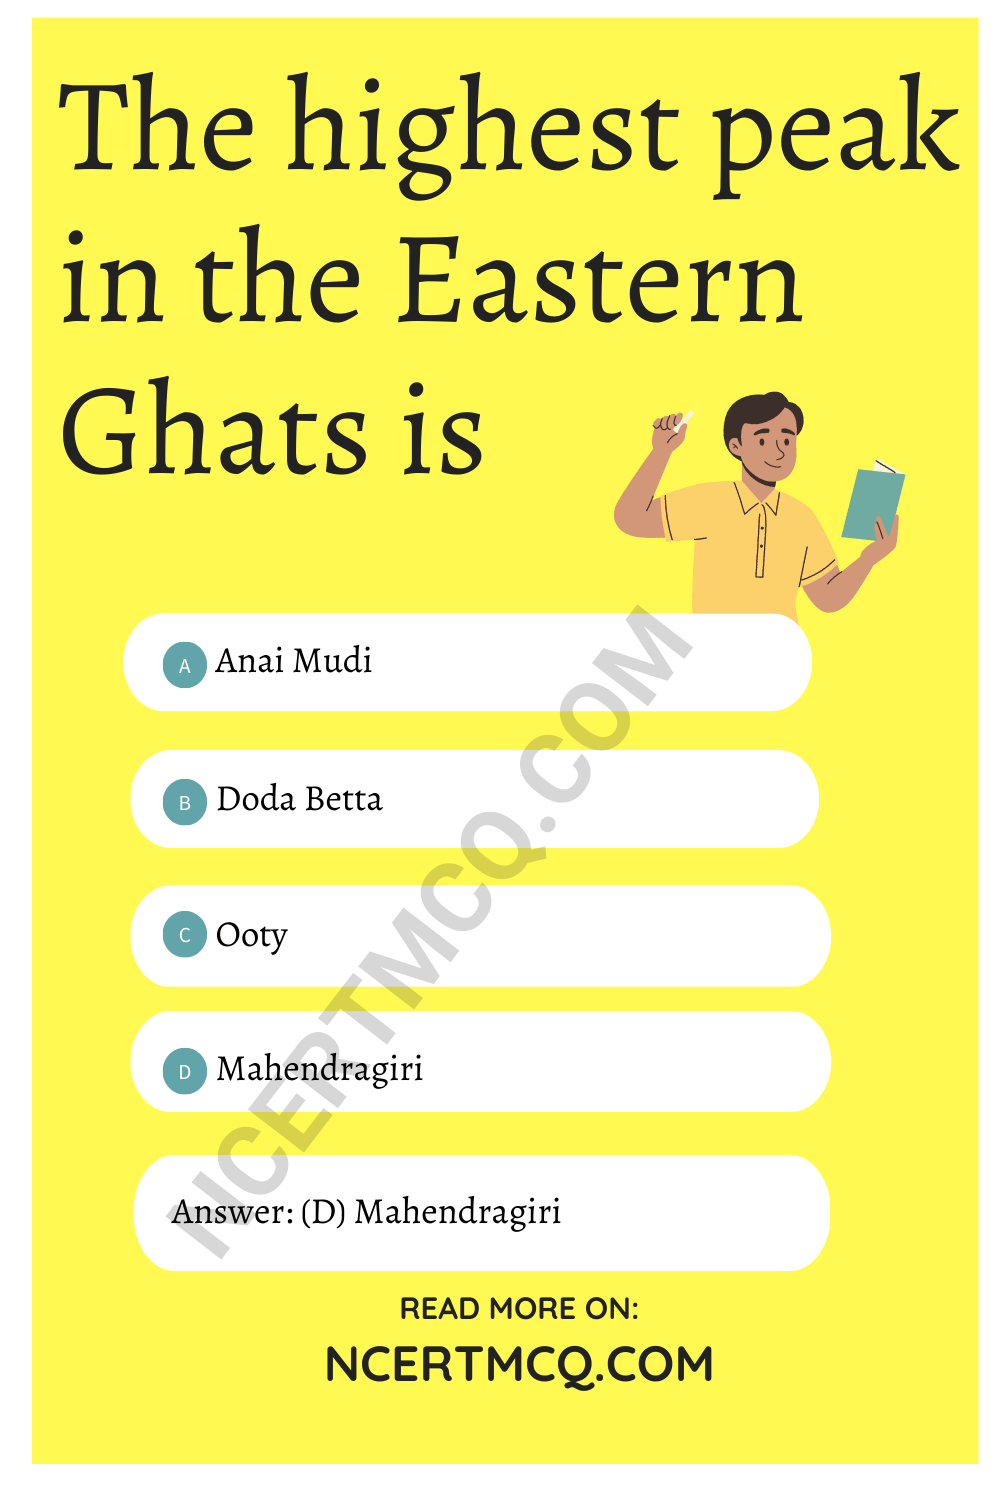 The highest peak in the Eastern Ghats is